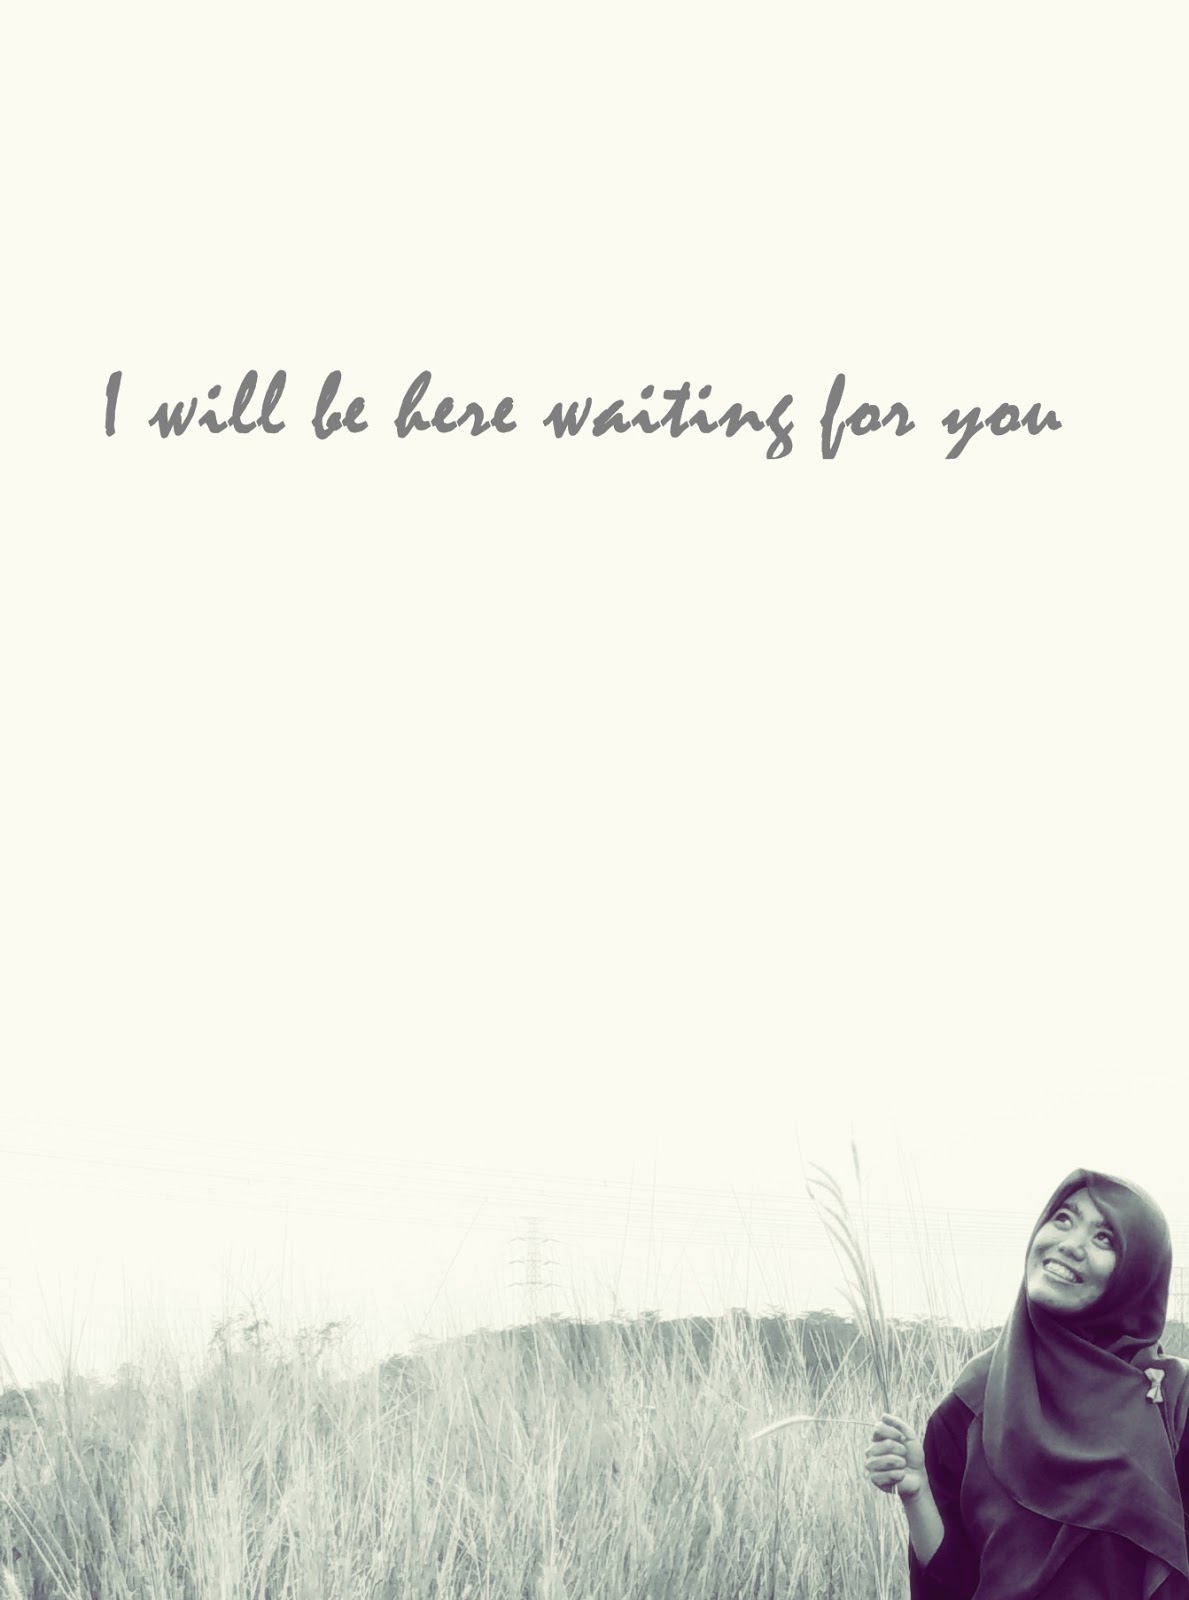 Waiting for something